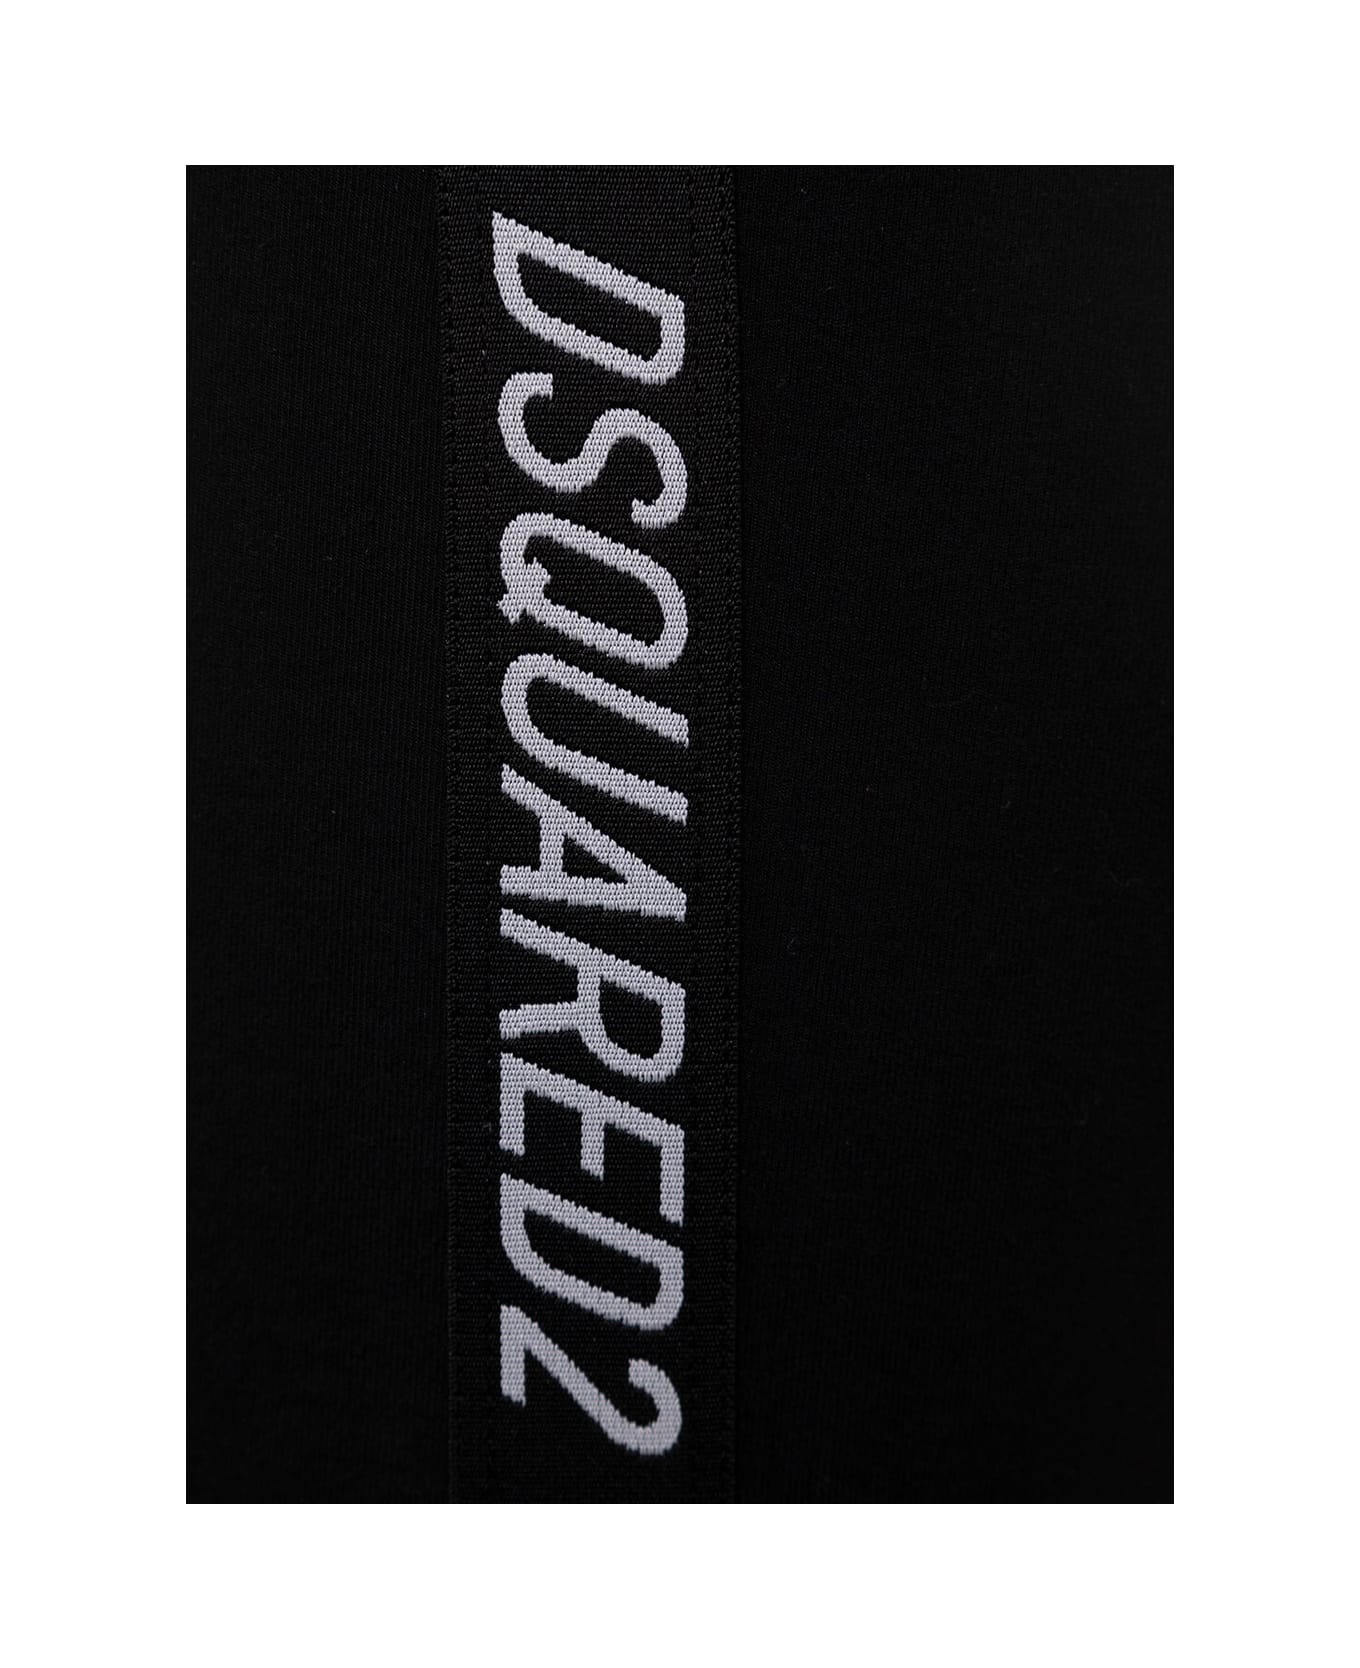 Dsquared2 D-squared2 Woman's Bike Stretch Cotton Bermuda Shorts With Logo - Black